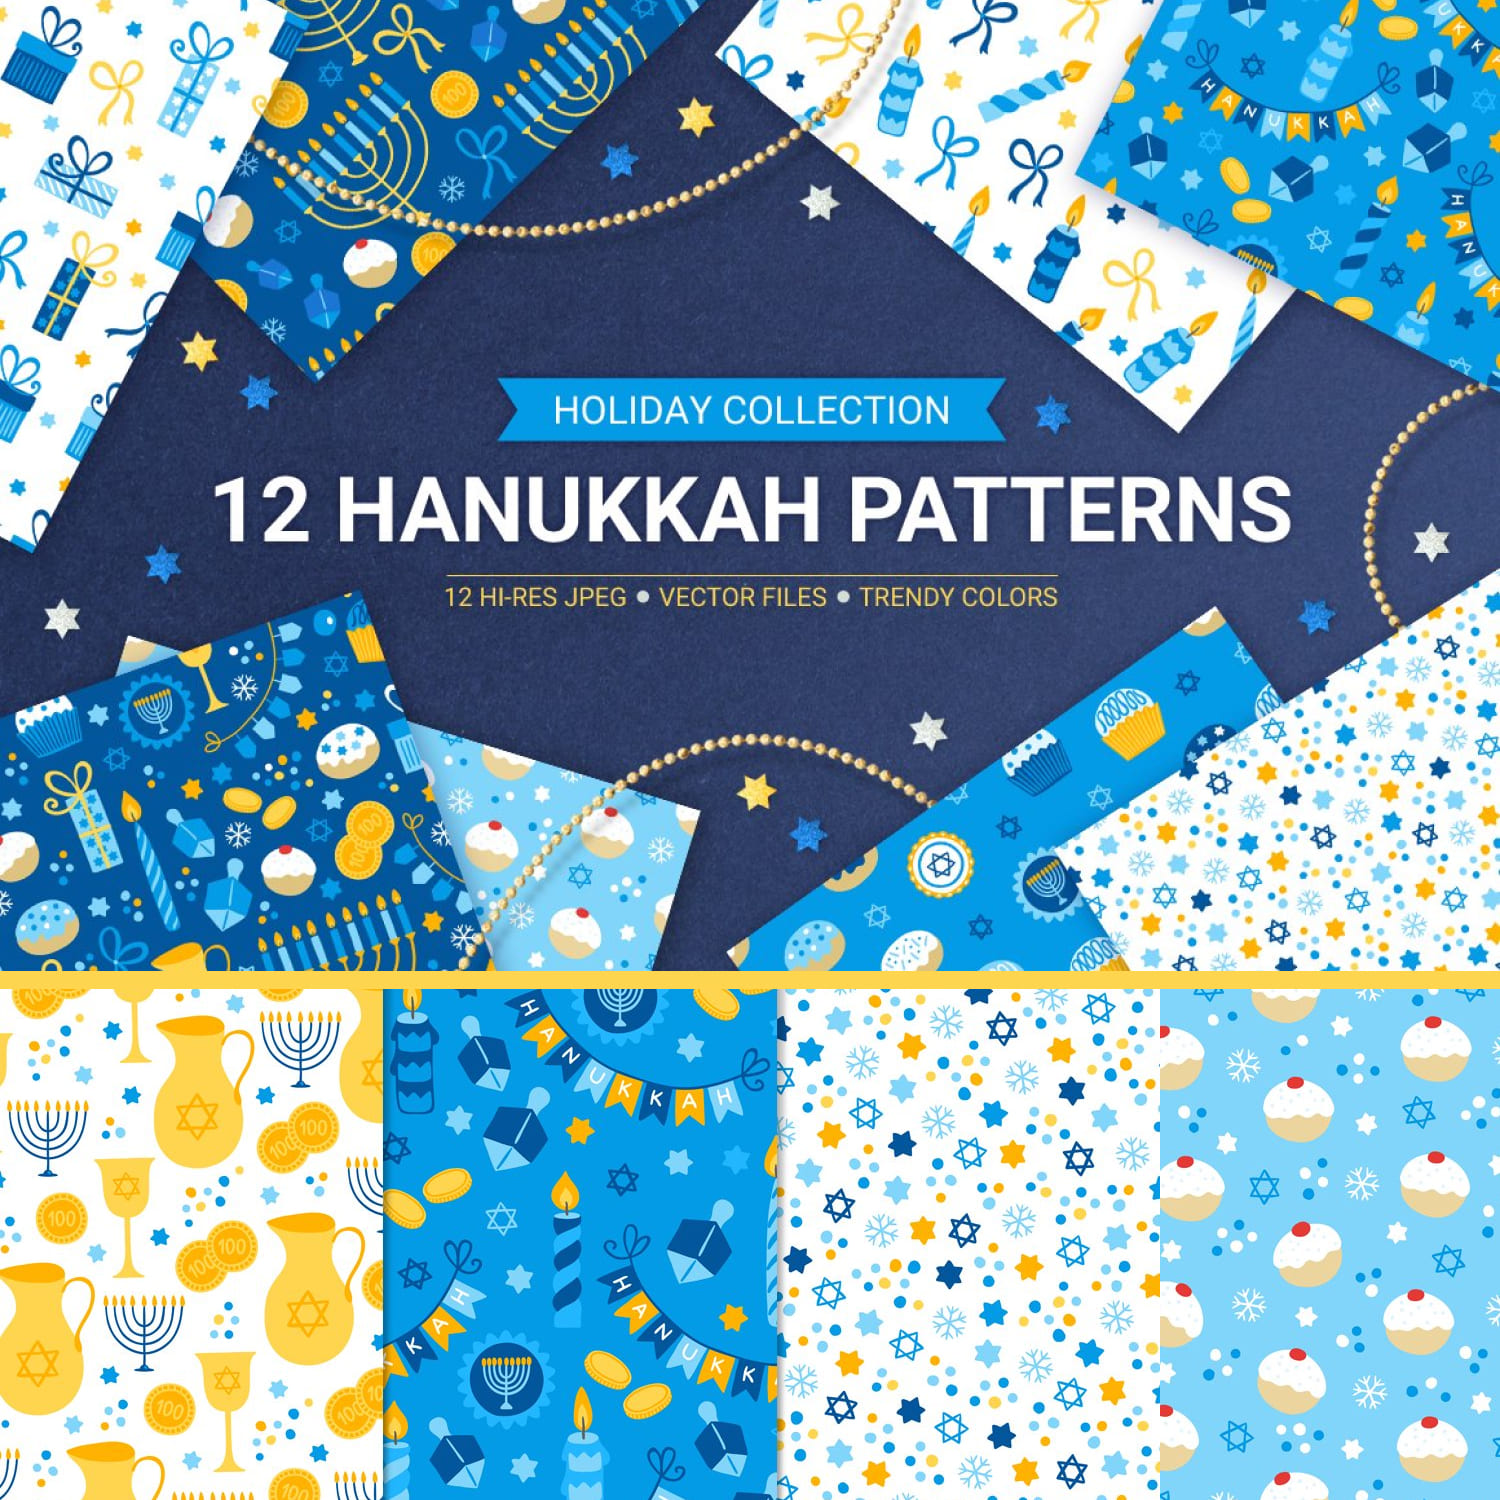 Prints of hanukkah seamless patterns.